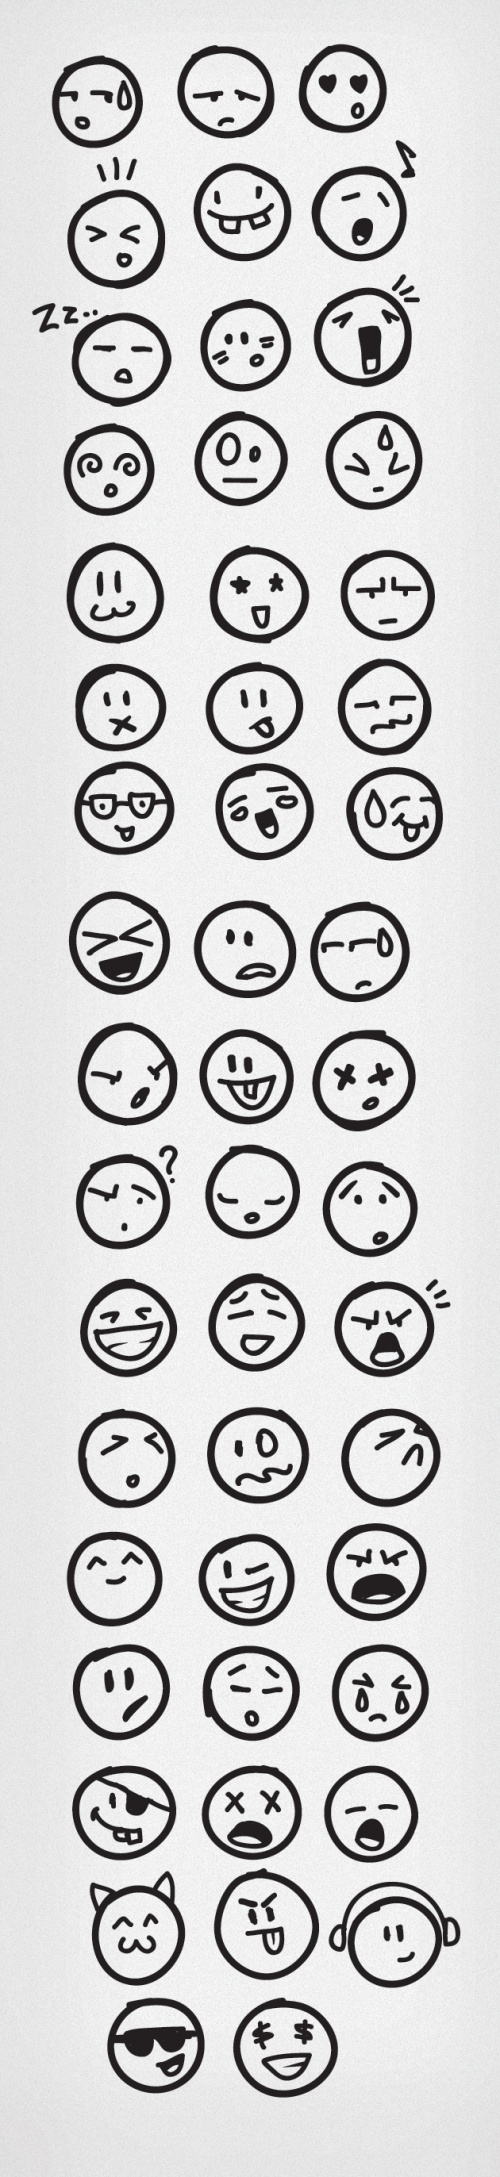 Designtnt - Vector Doodle Emoticons